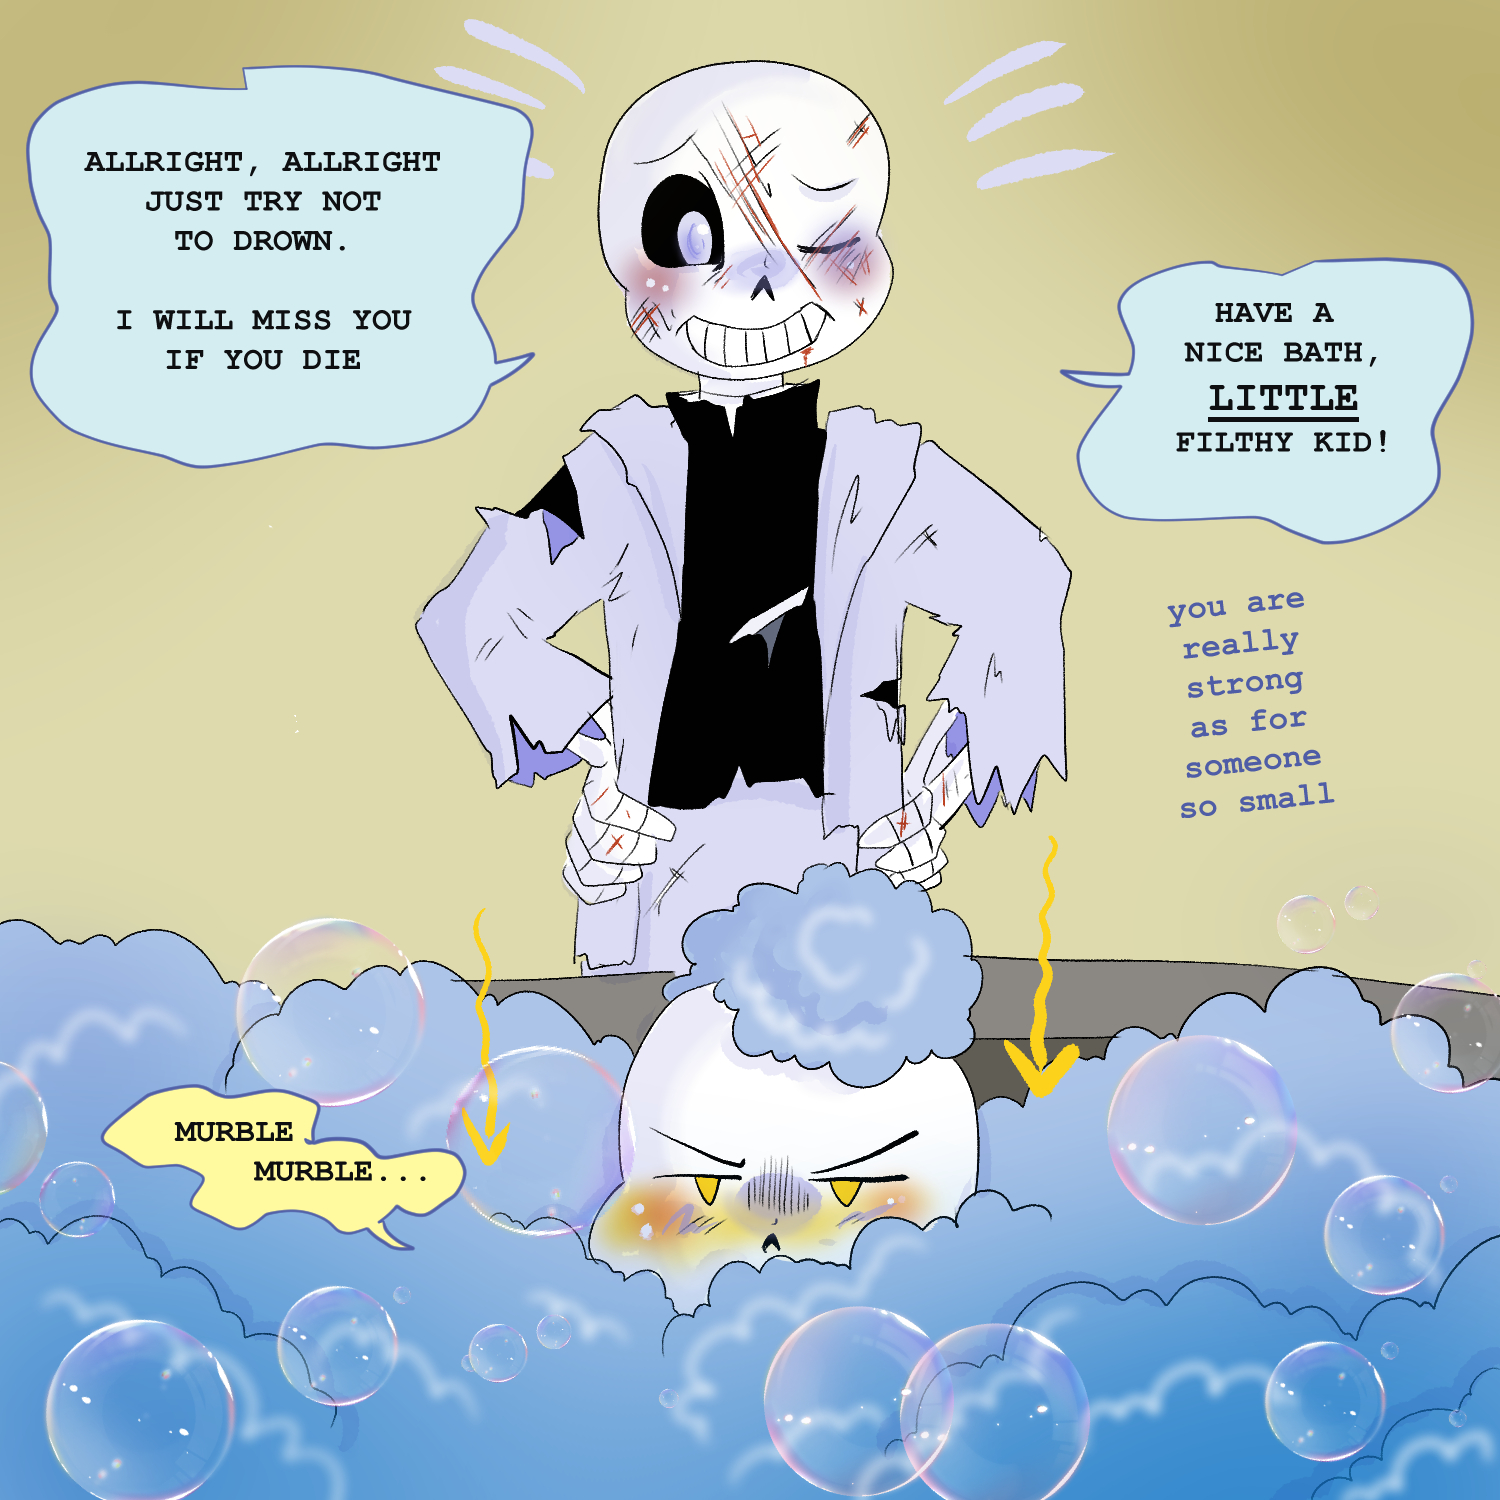 Killer Sans One Fear - Undertale AU Comic Dub 